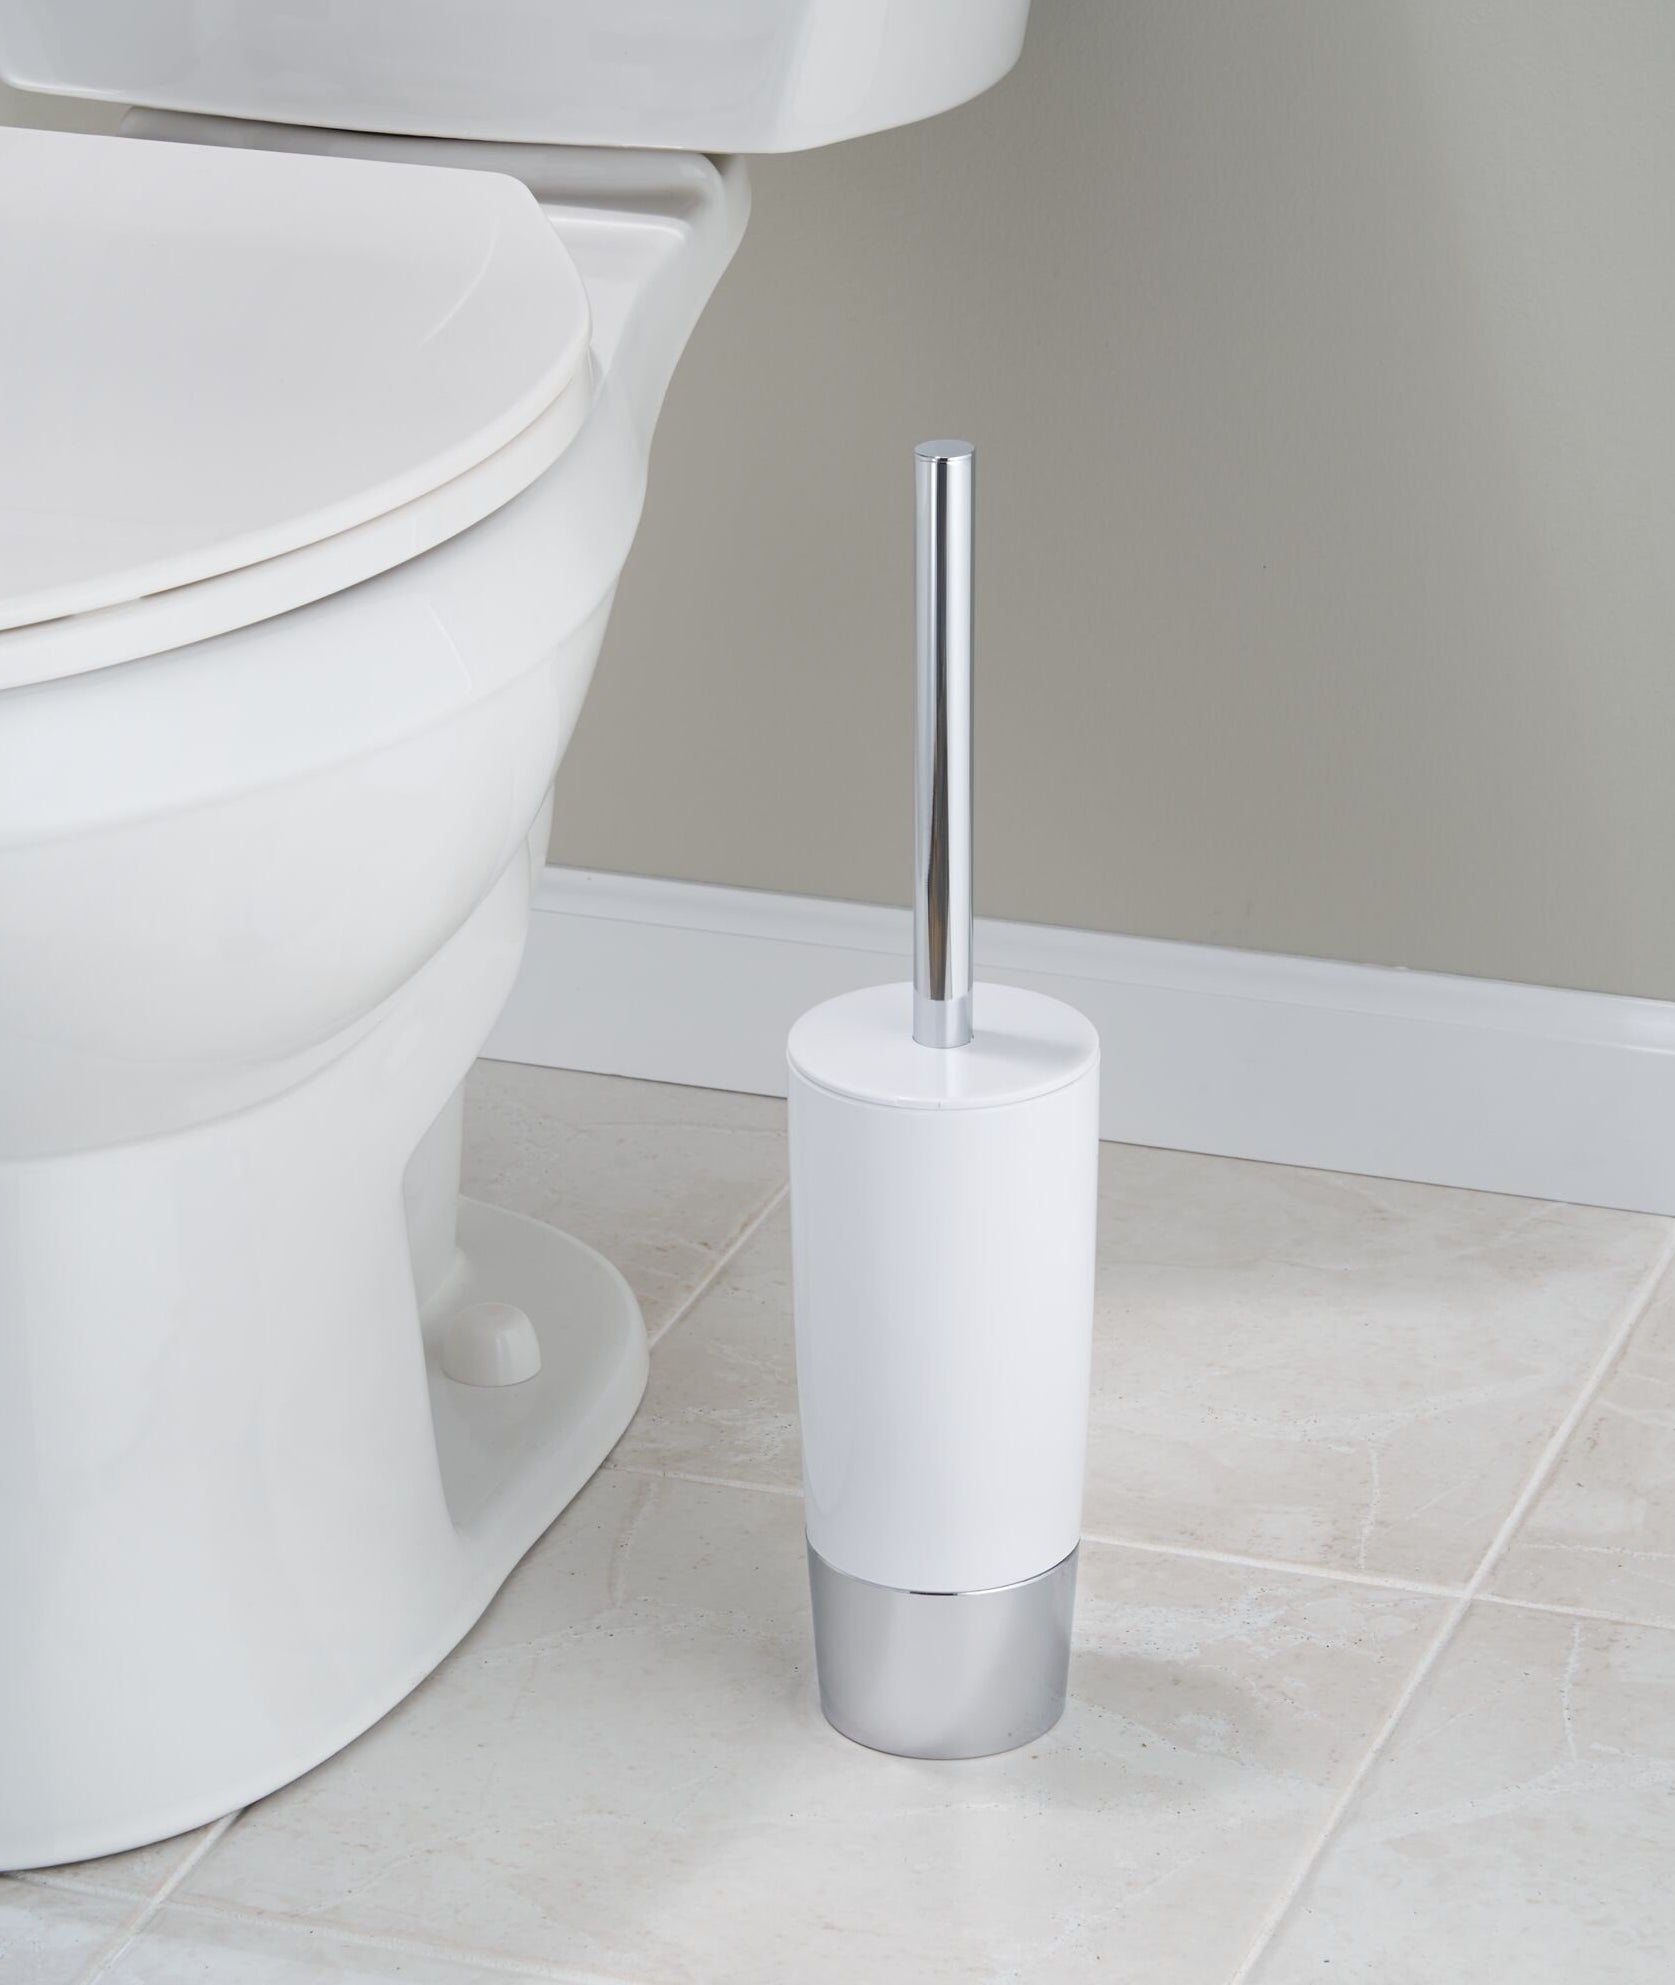 Modern minimalist toilet brush in a white holder next to a toilet